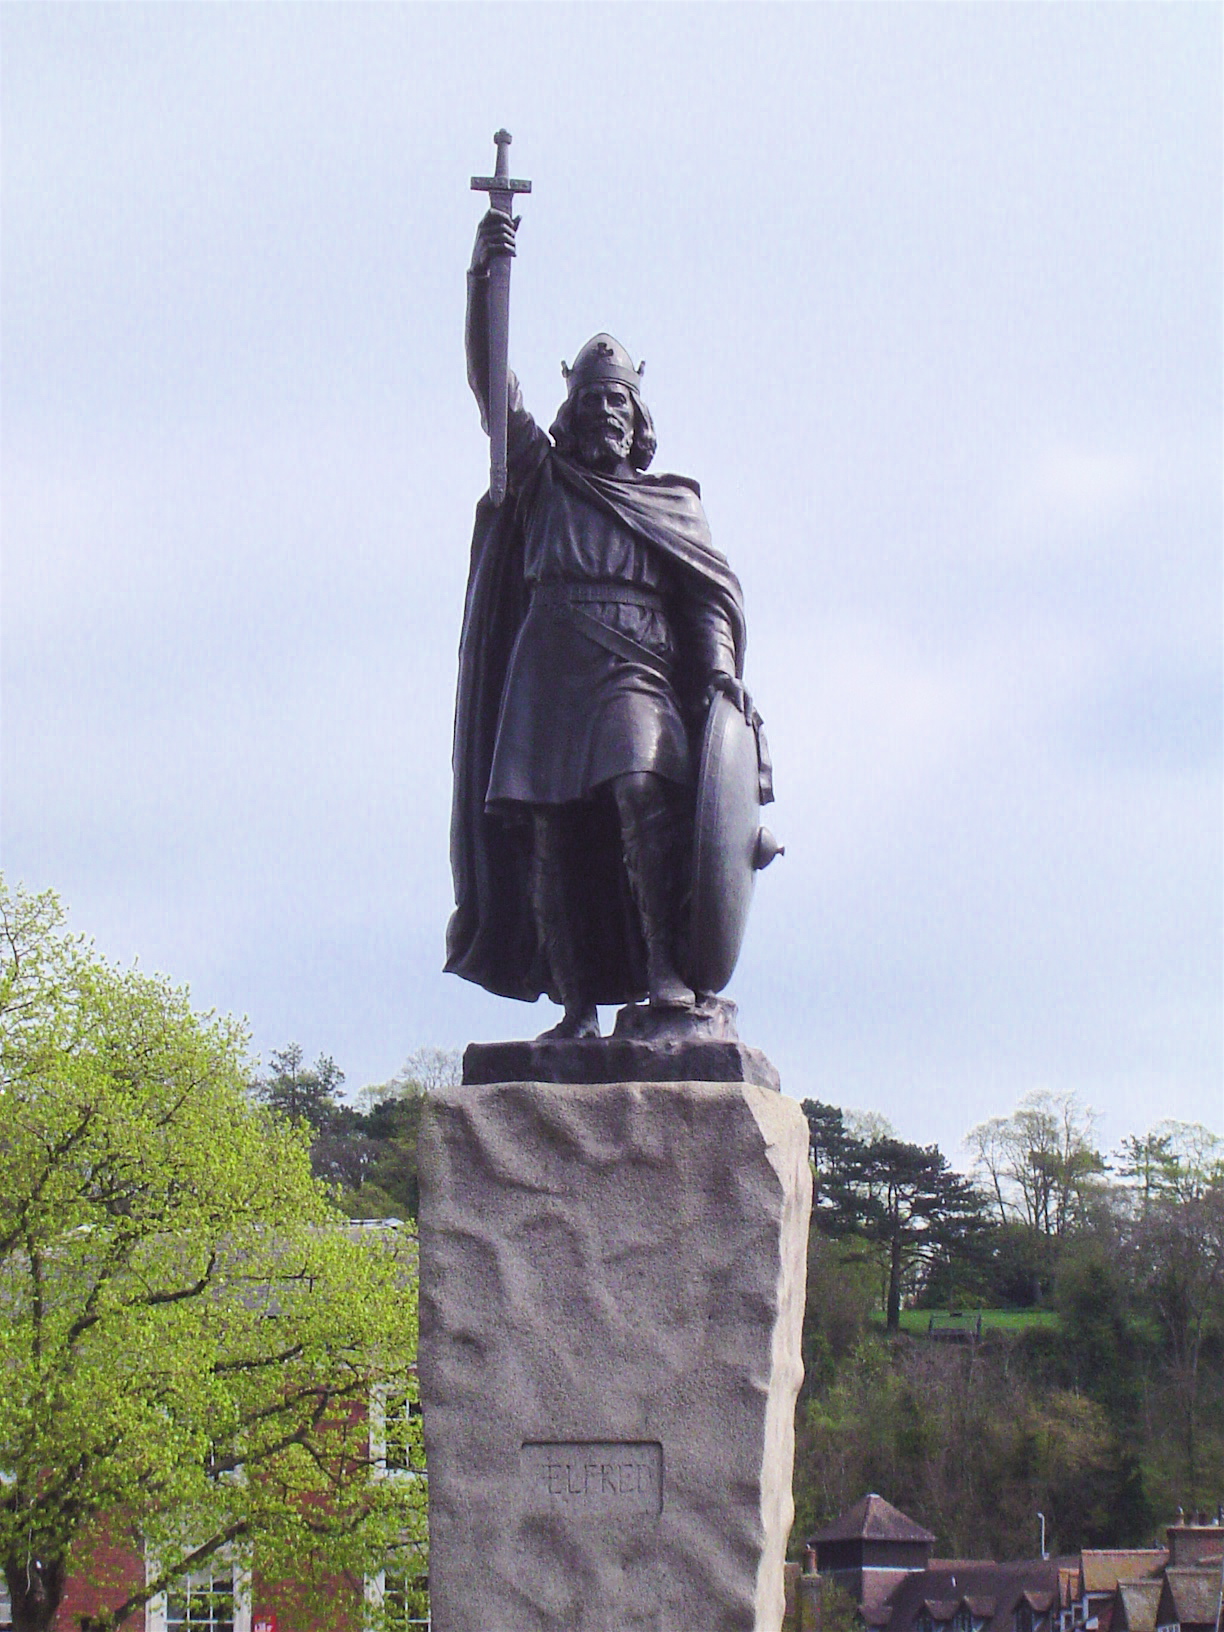 https://lizzieparker.files.wordpress.com/2011/04/king-alfred-statue-winchester.jpg

